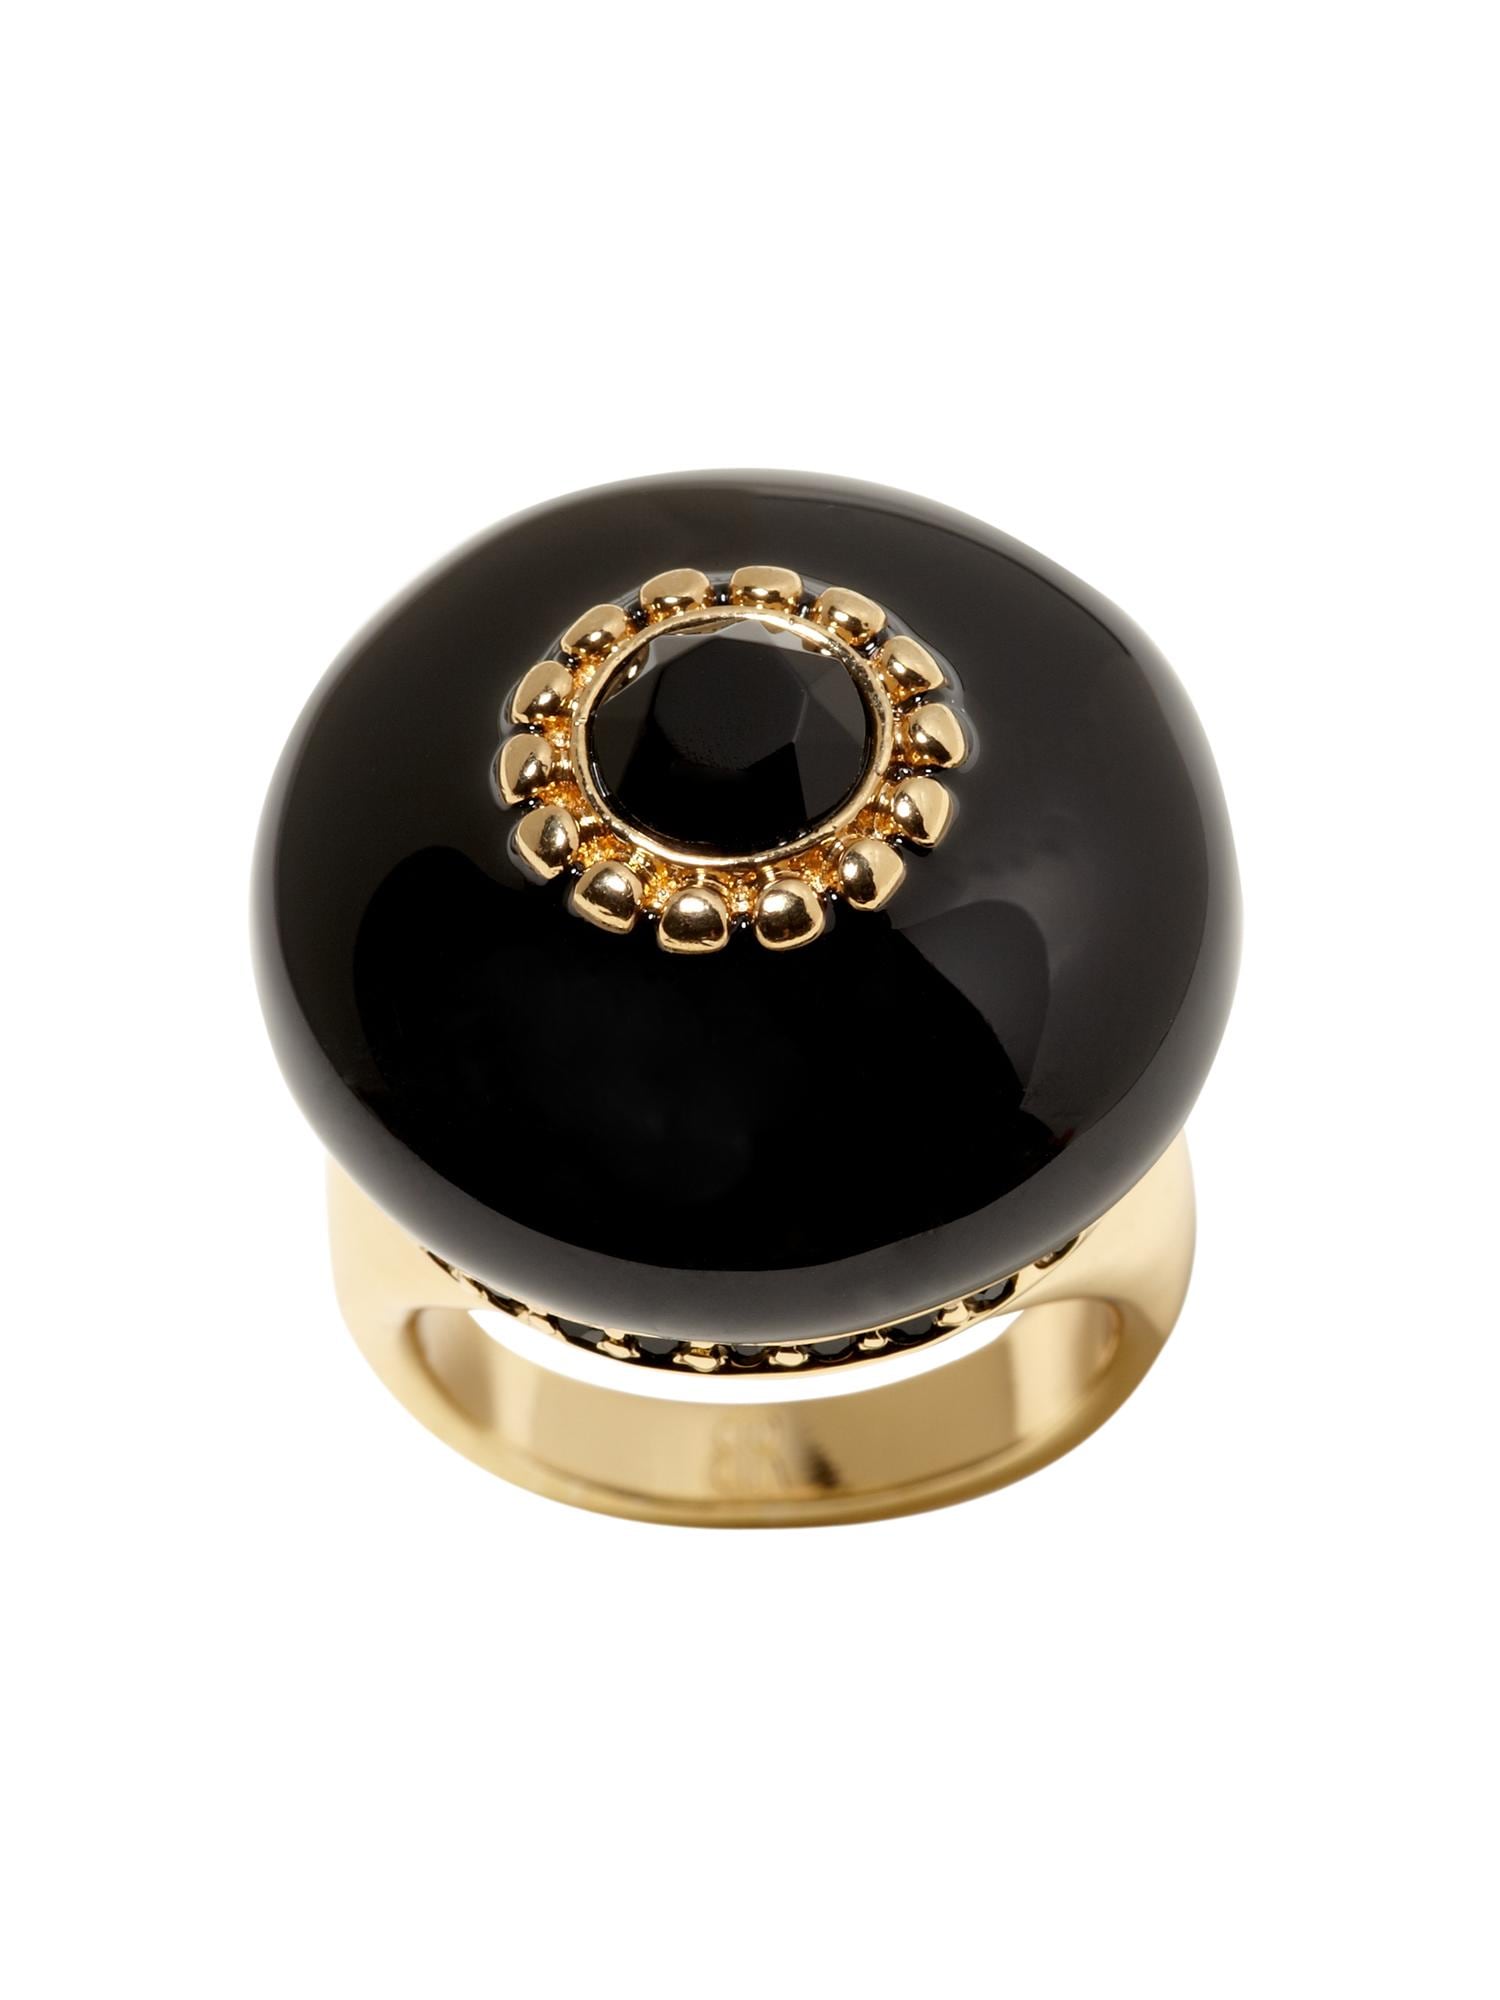 Deco black enamel cocktail ring